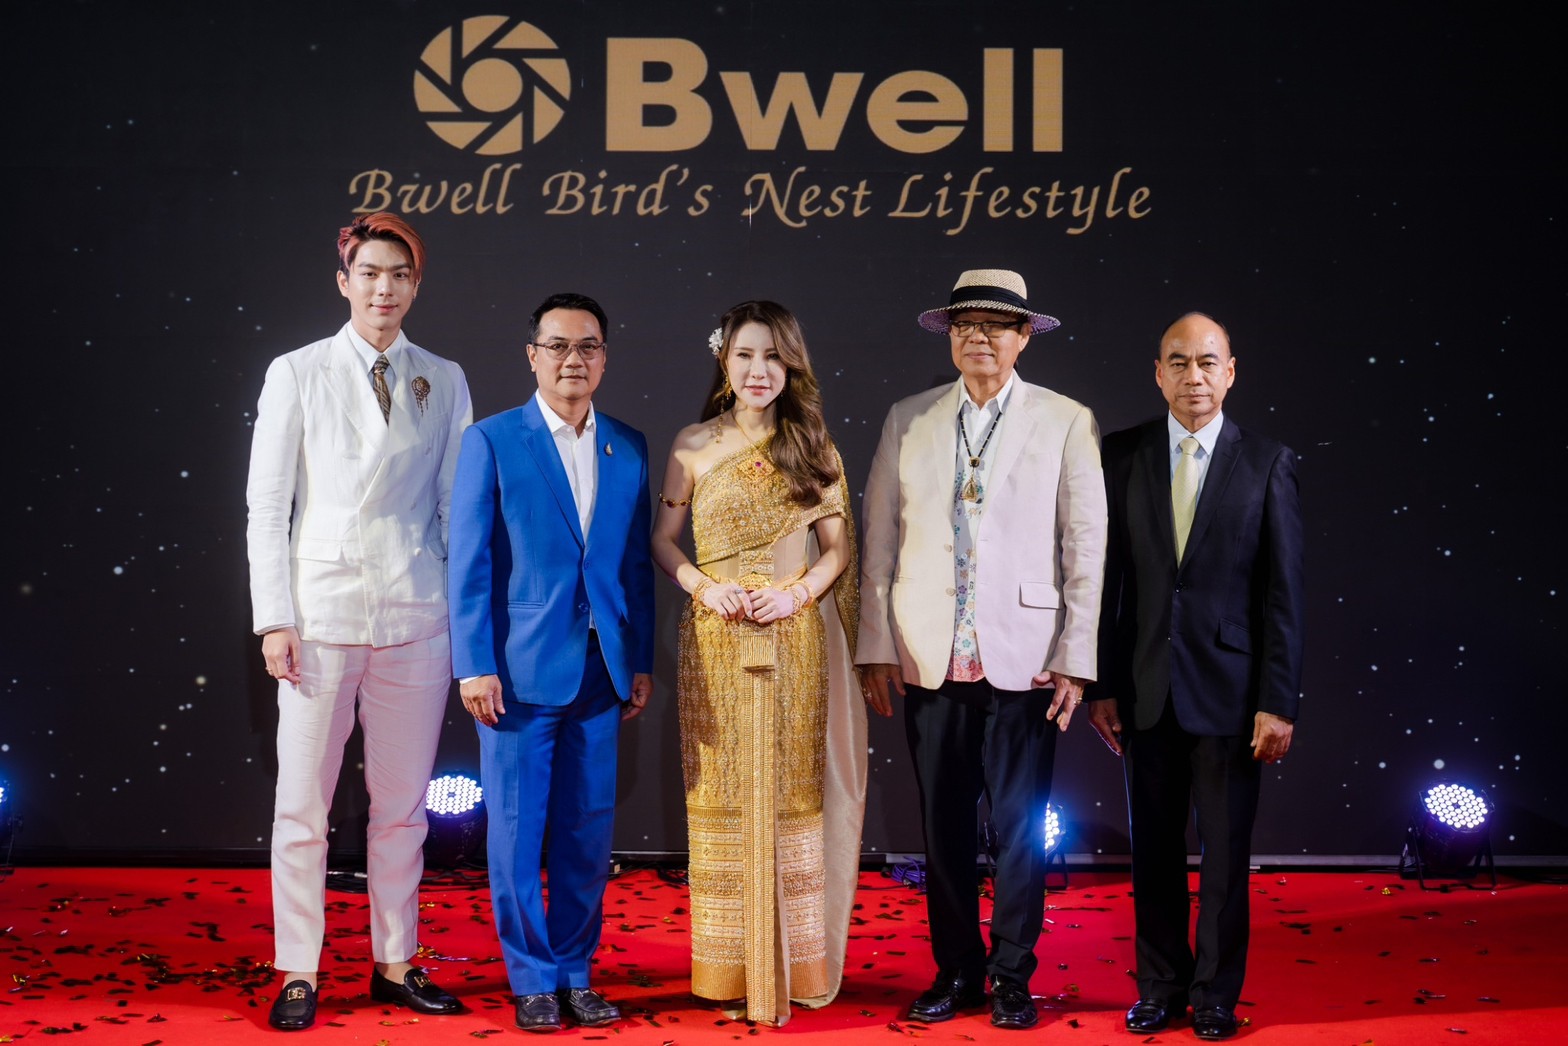  Bwell เครื่องดื่มรังนกแท้ เปิดตัว ‘Bwell Bird’s nest Lifestyle’ คาเฟ่รังนกแห่งแรกของไทย สาขา Iconsiam ตอบโจทย์ไลฟ์สไตล์คนรุ่นใหม่และนักท่องเที่ยว